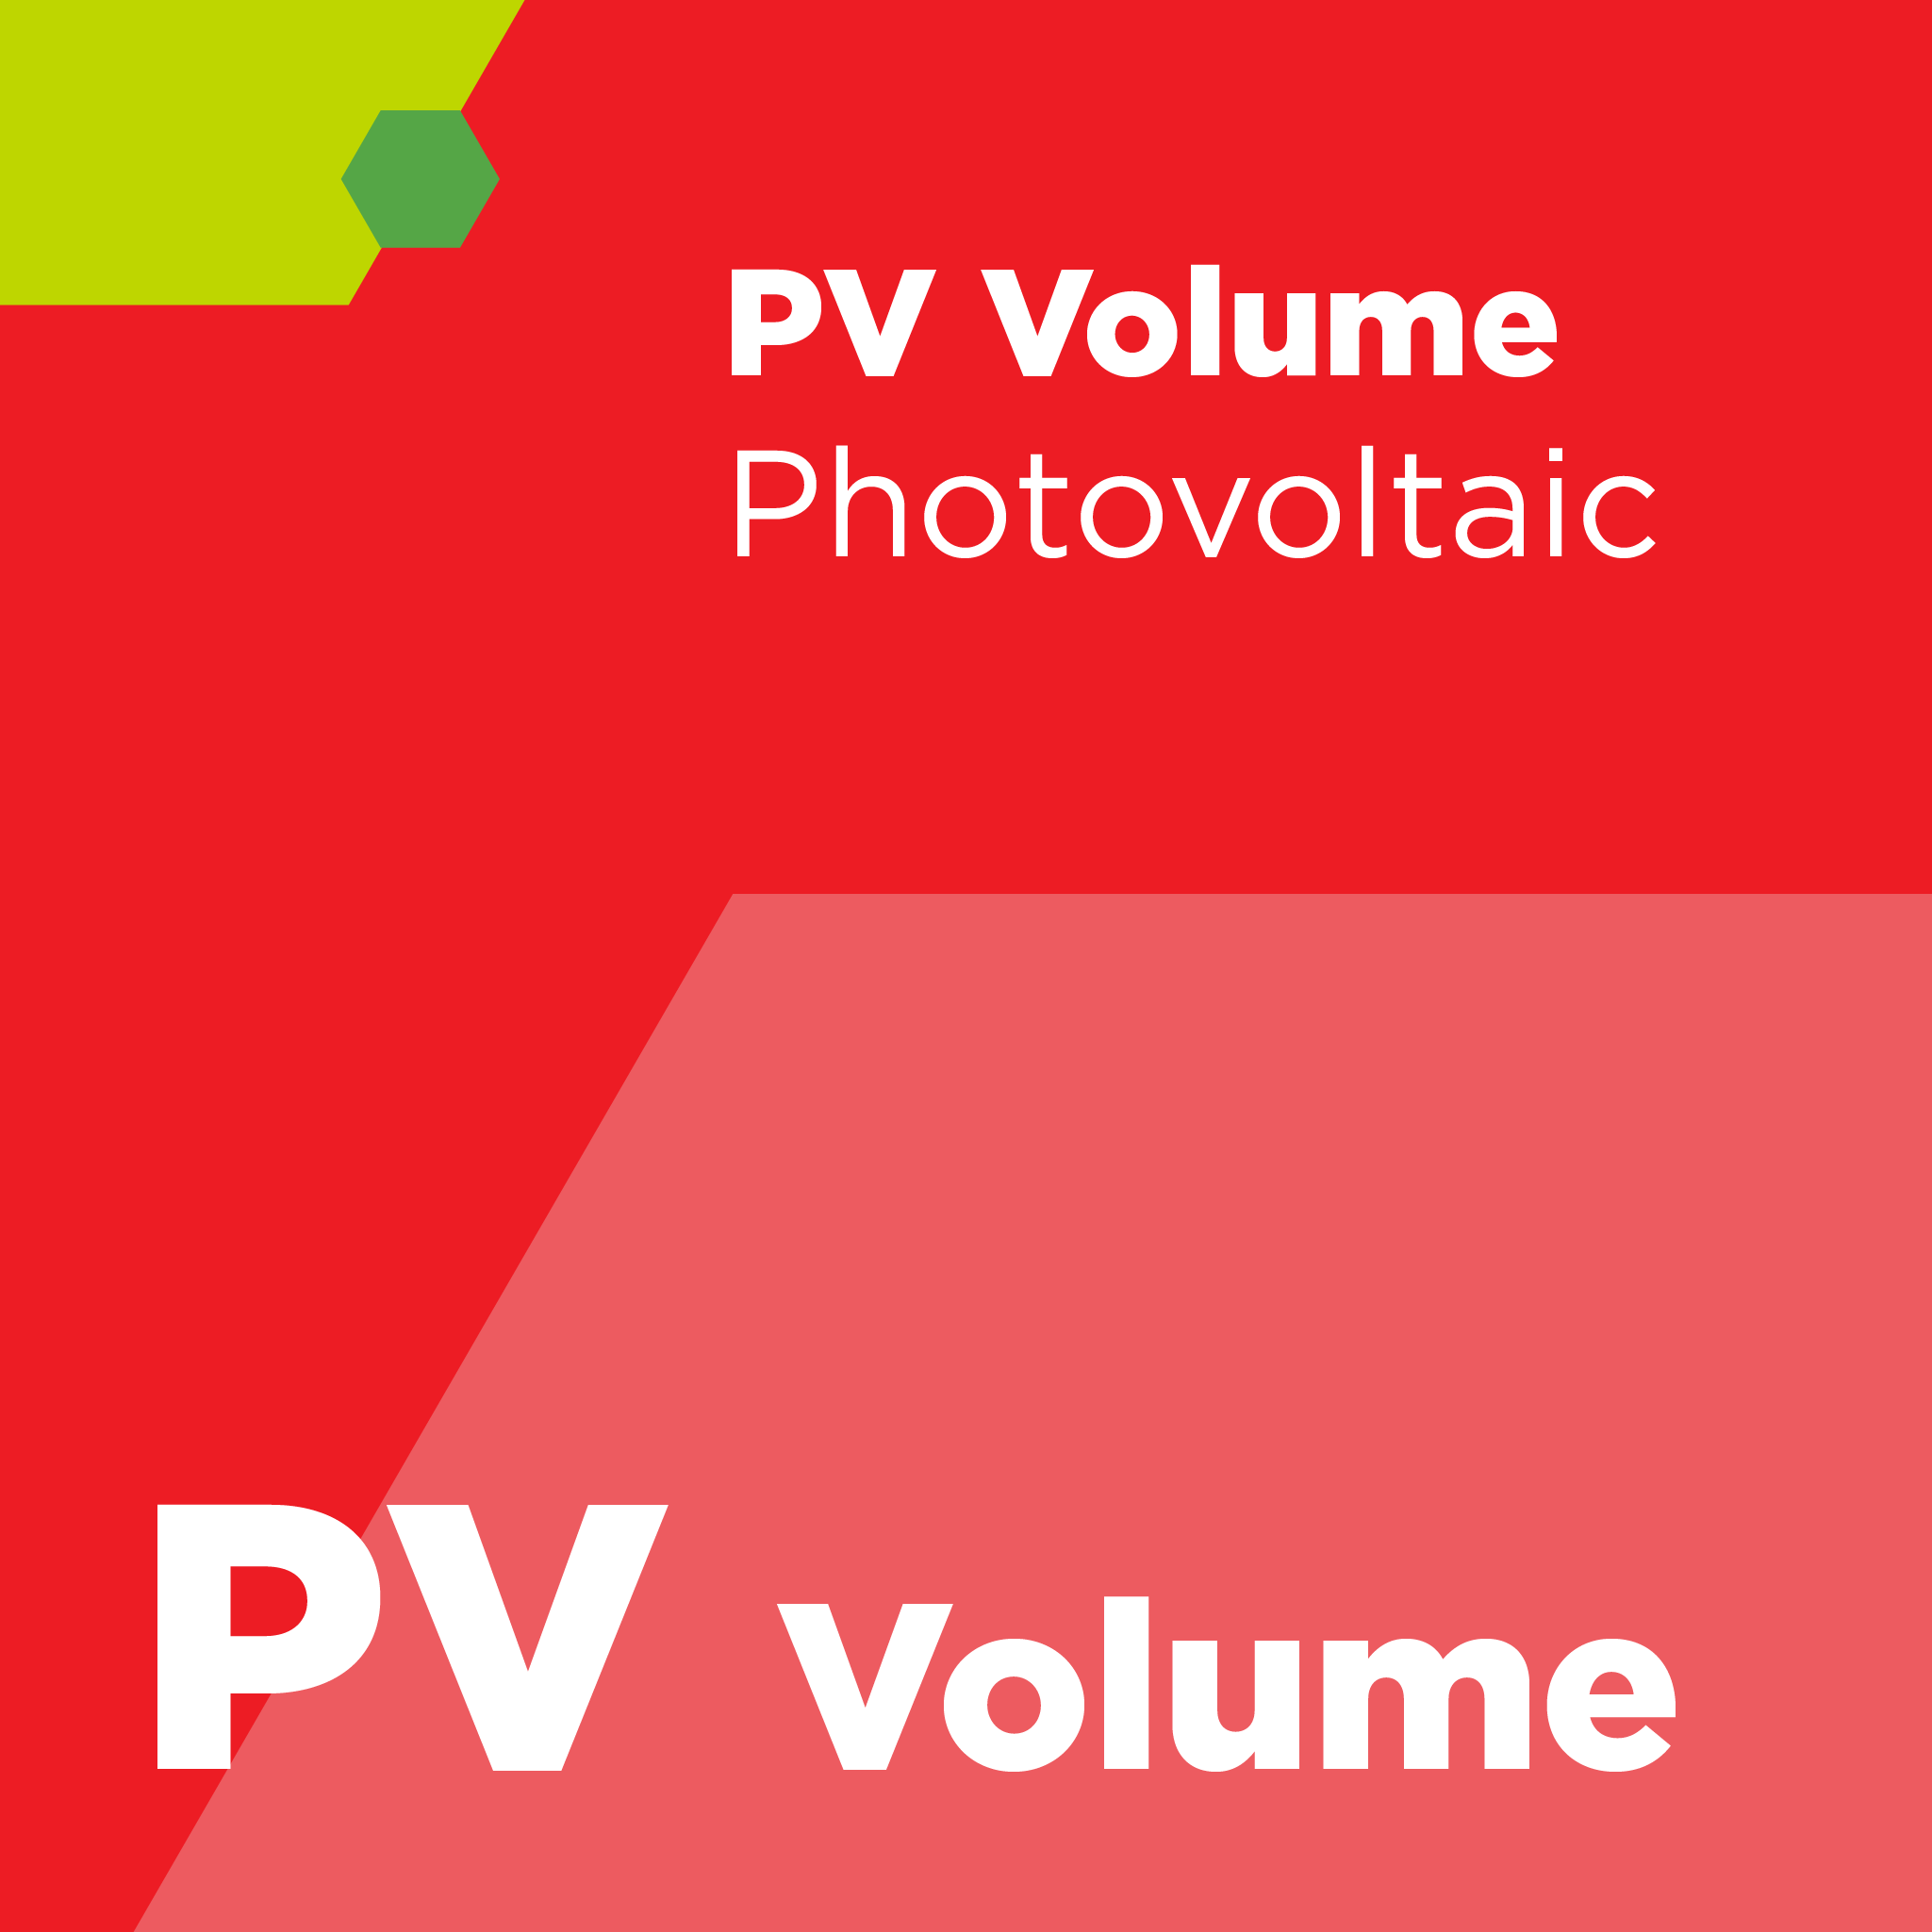 PV00800 - SEMI PV8 - Guide for Nitrogen (N2), Bulk, Used in Photovoltaic Applications